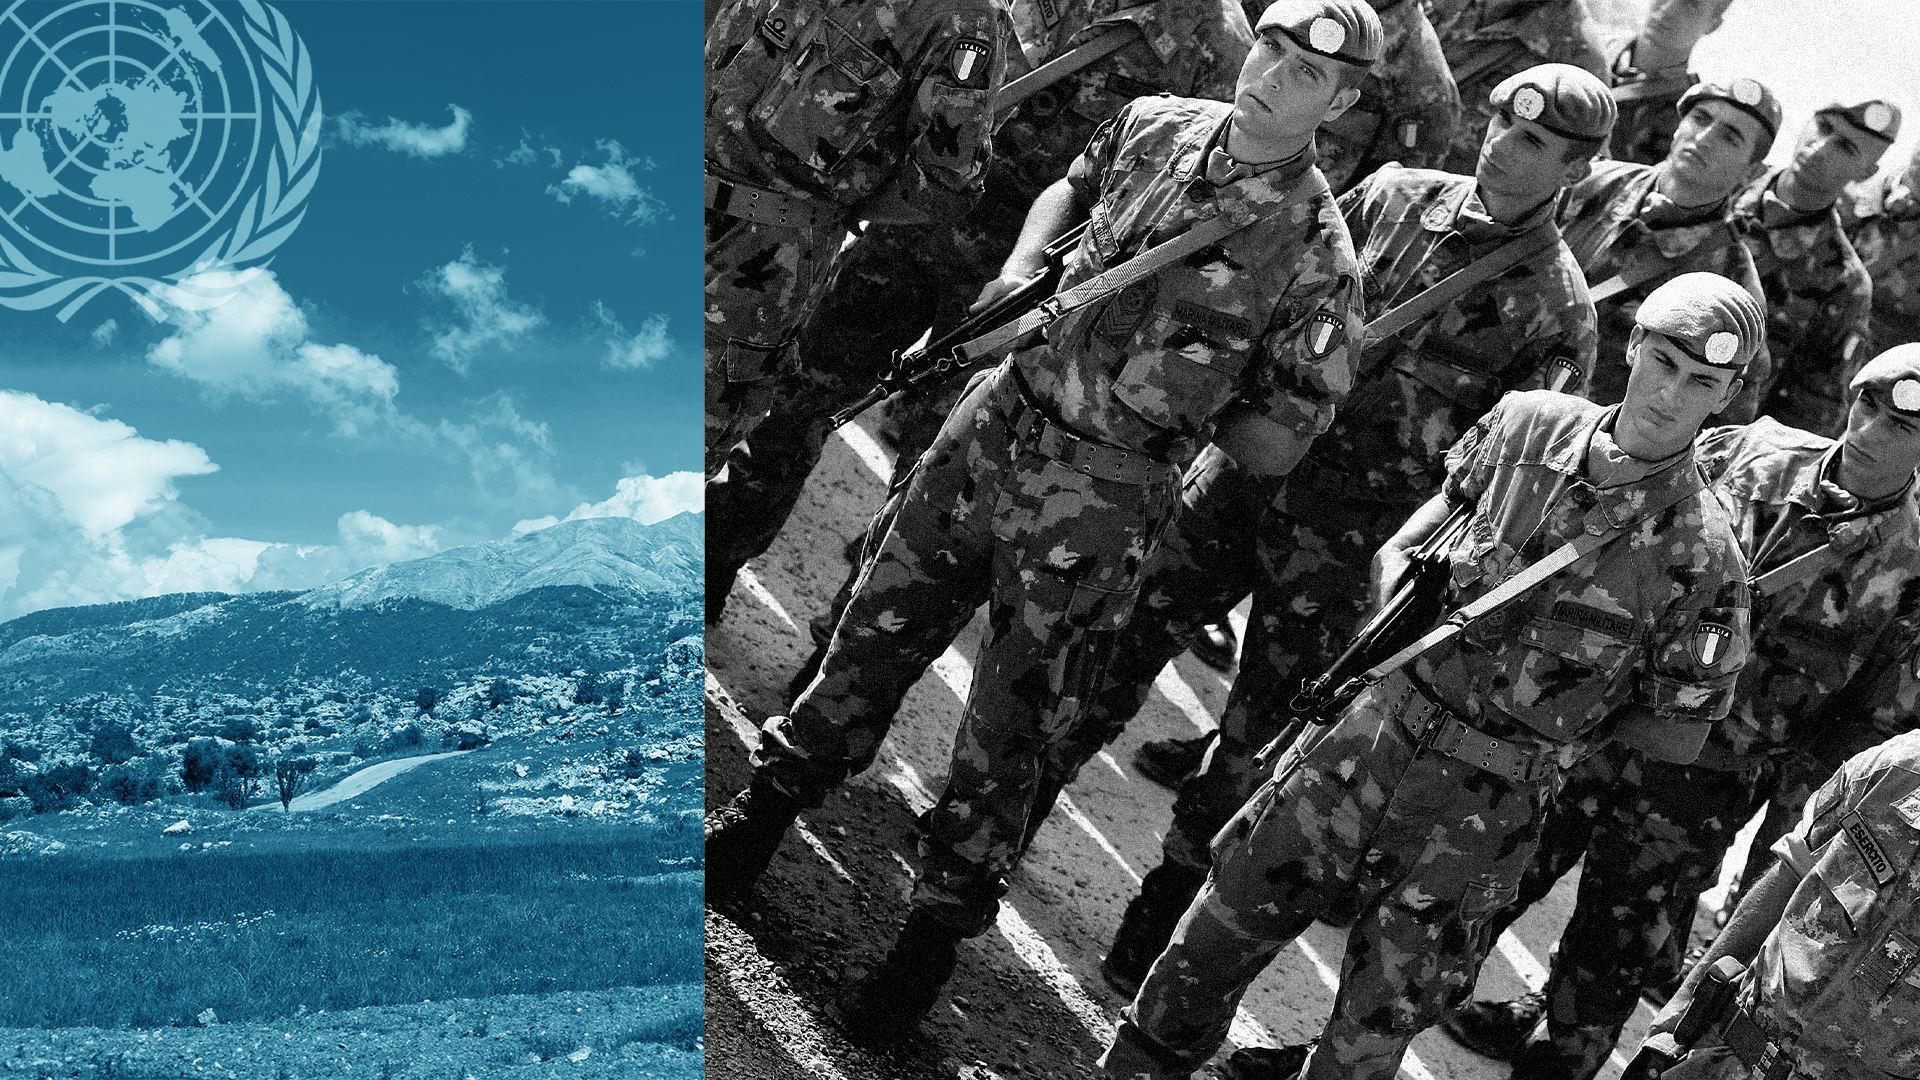 UN Peacekeeping operations at a crossroads